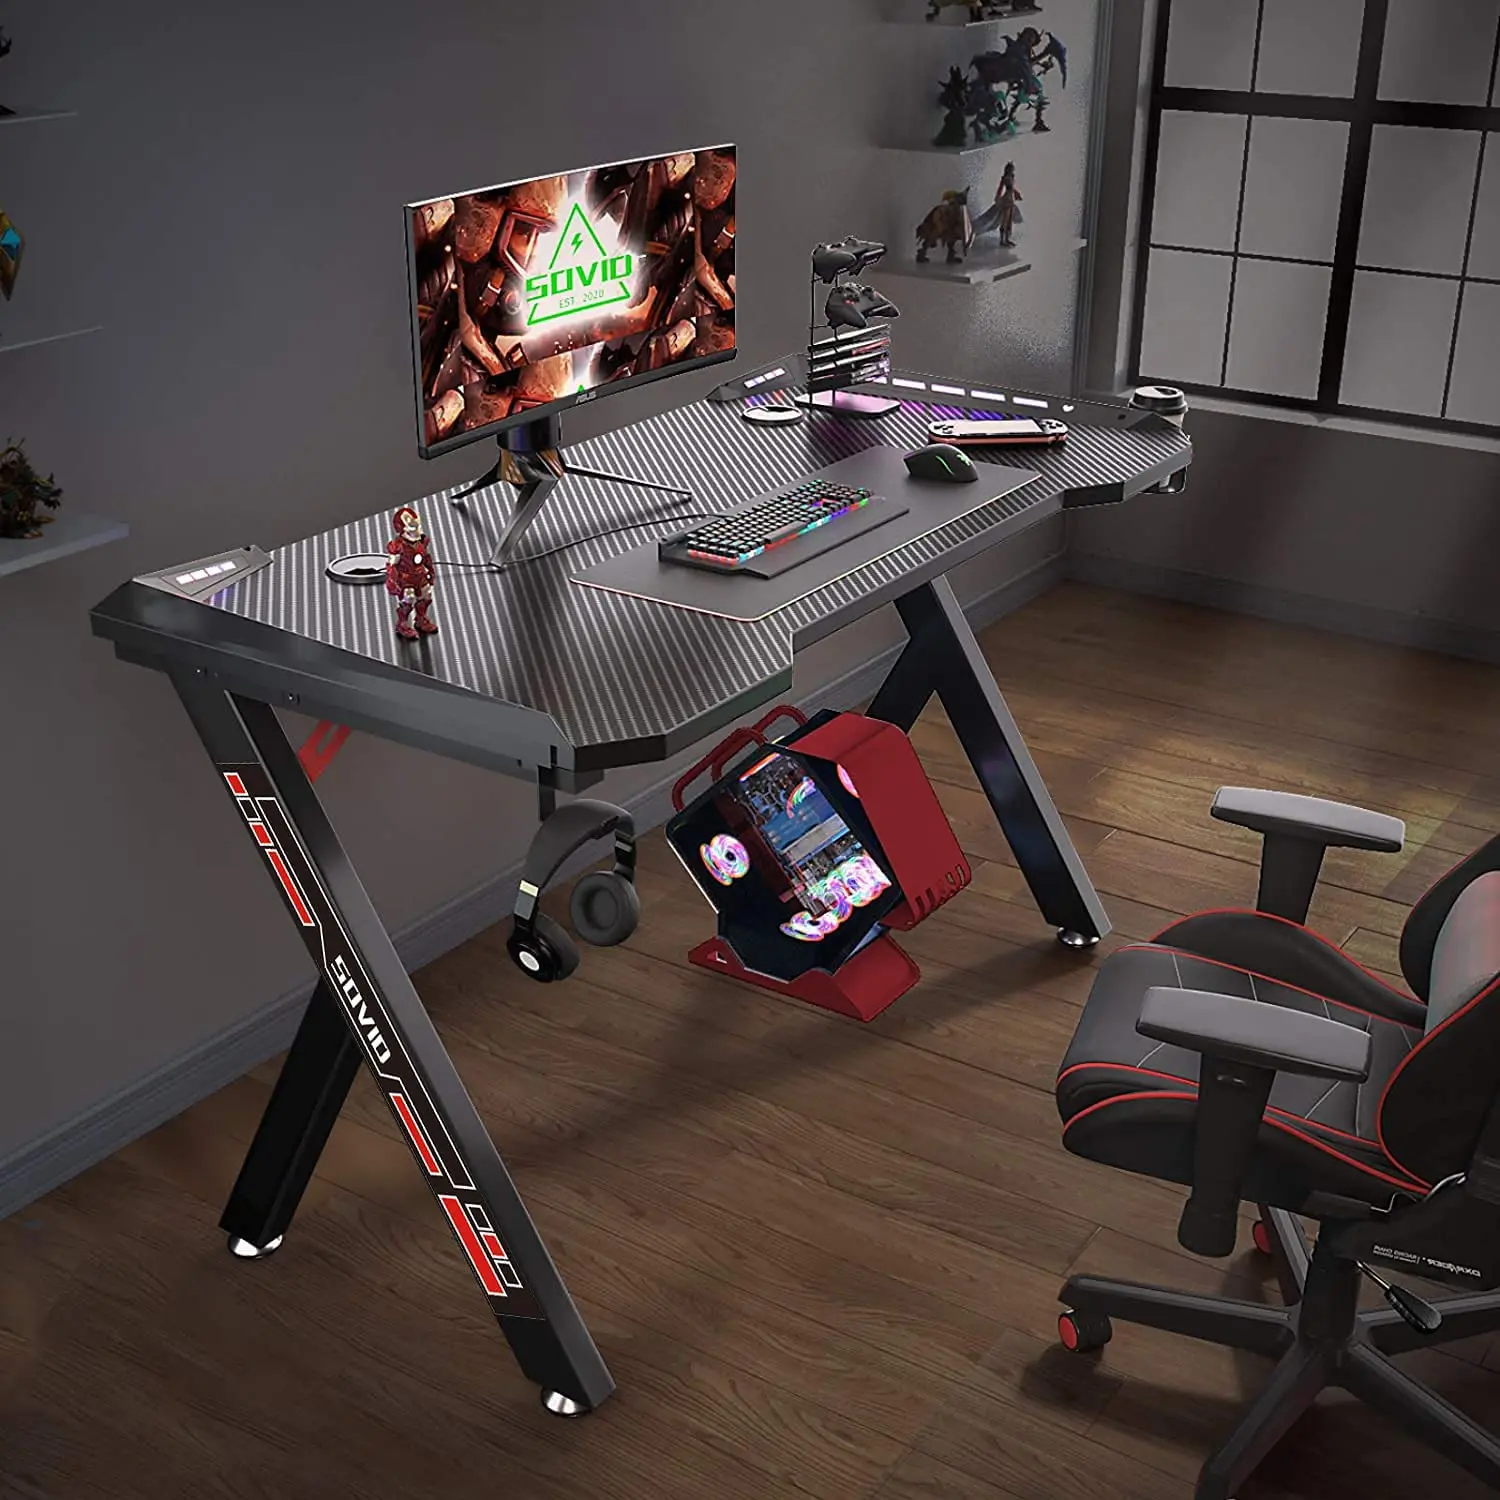 

Gaming Desk with LED RGB Lights 47Inch PC Computer Desk Y Shaped Gamer Setup Accessories Handle Rack Cup Holder & Headphone Hook